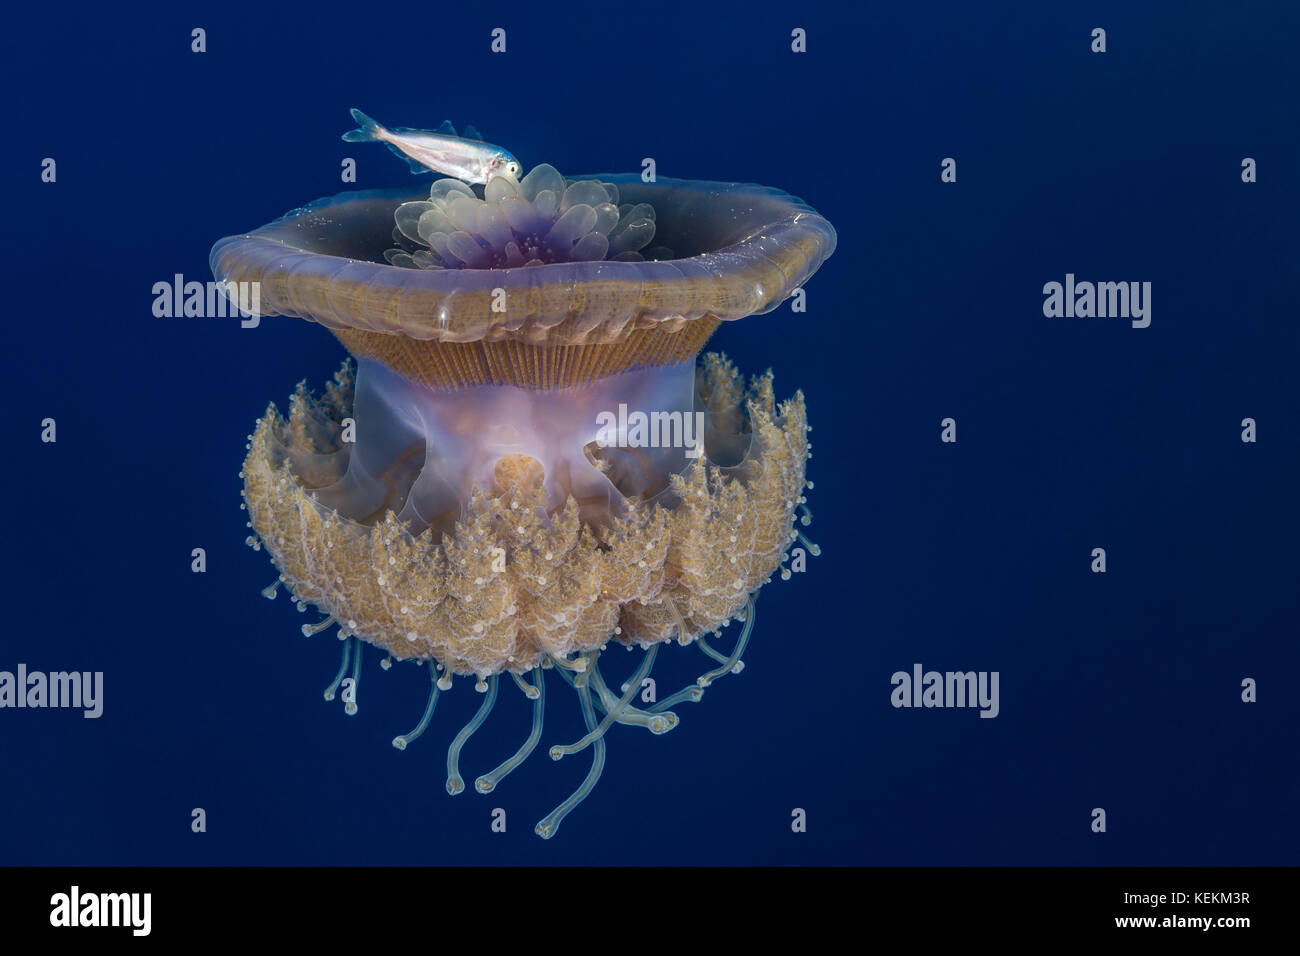 Il cavolfiore meduse e novellame, cephea cephea, Elphinstone Reef, Mar Rosso, Egitto Foto Stock